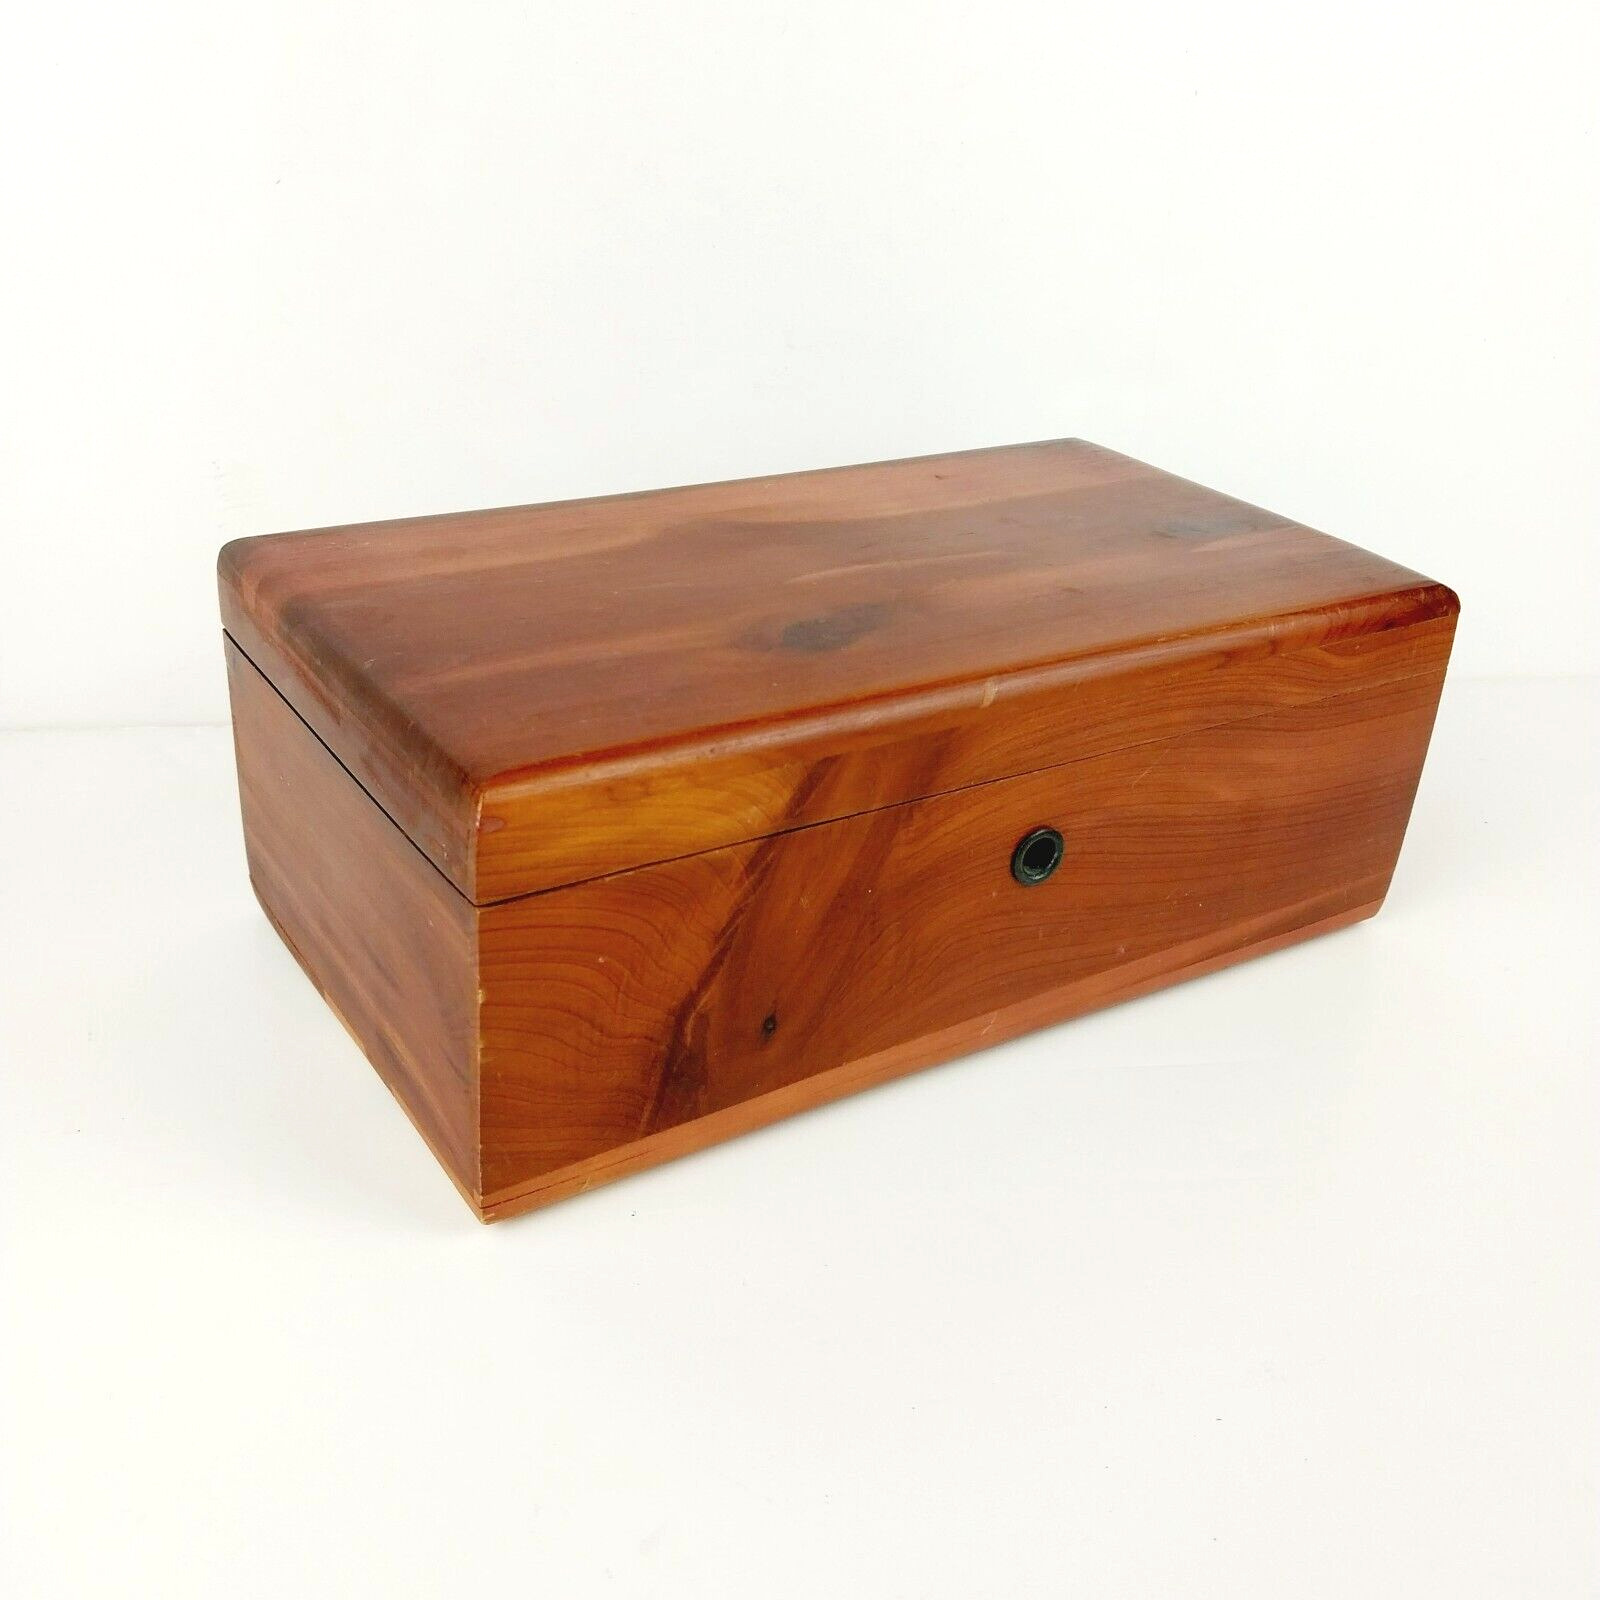 Vintage Lane Miniature Wooden Cedar Chest Jewelry Trinket Box - No Key